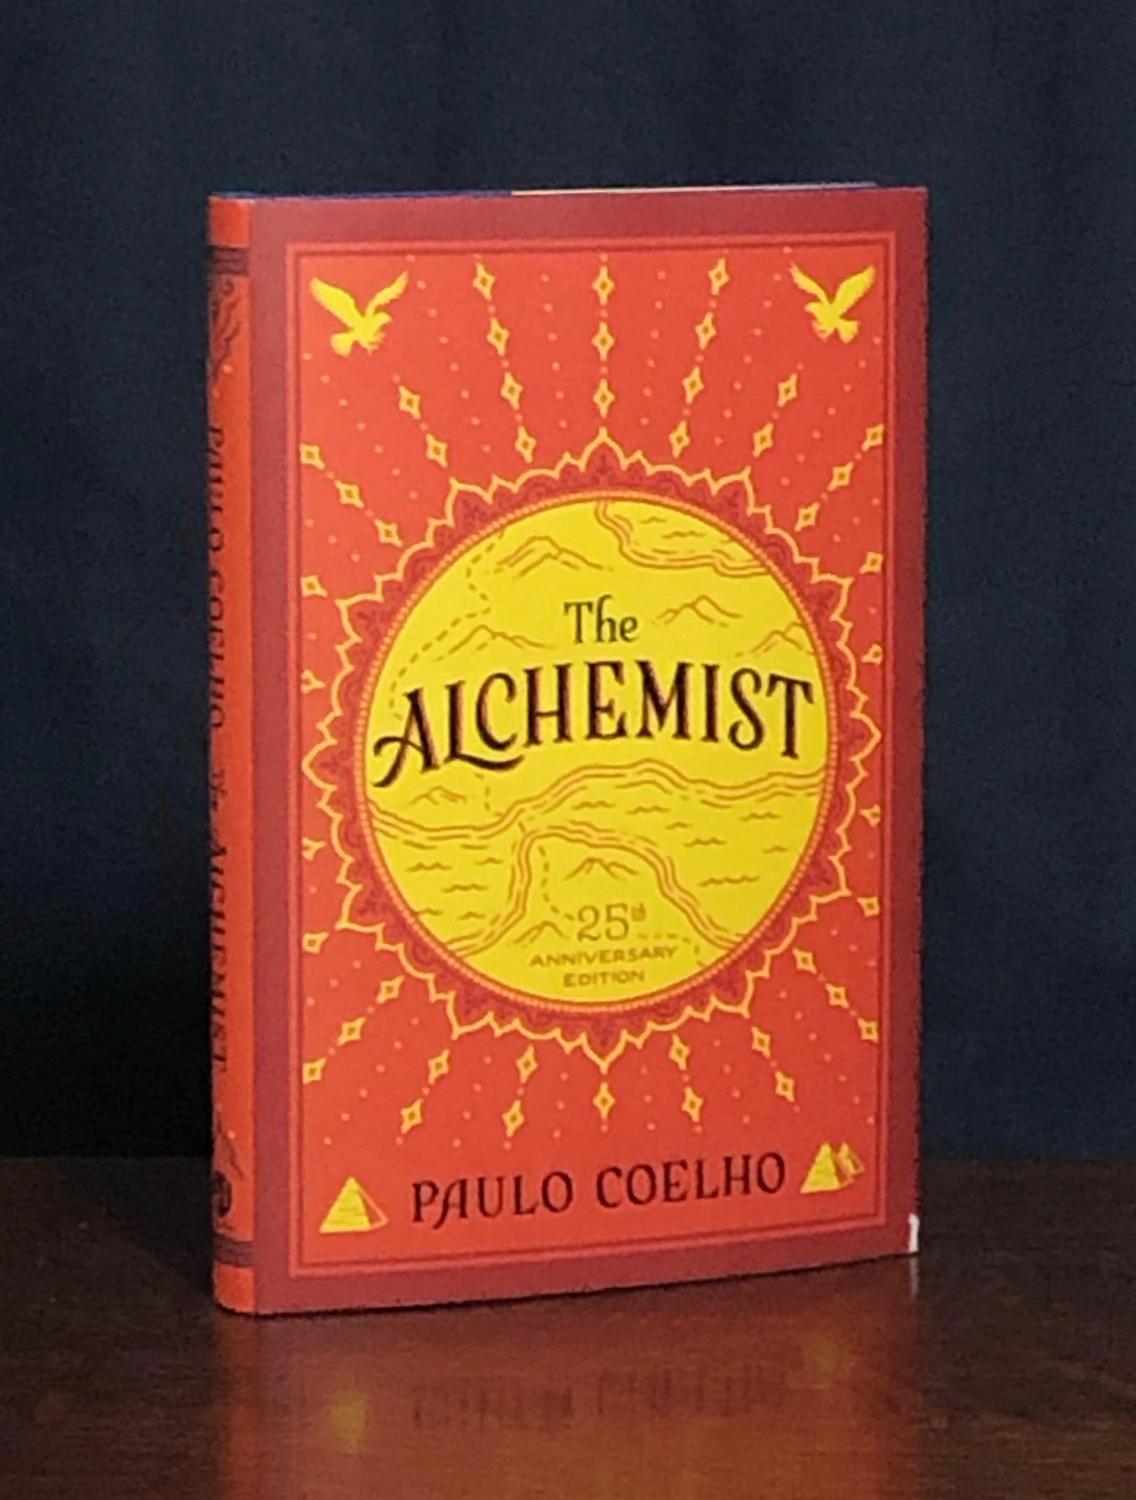 Paulo Coelho The Alchemist 25th Anniversary (Signed Edition) by Paulo ...